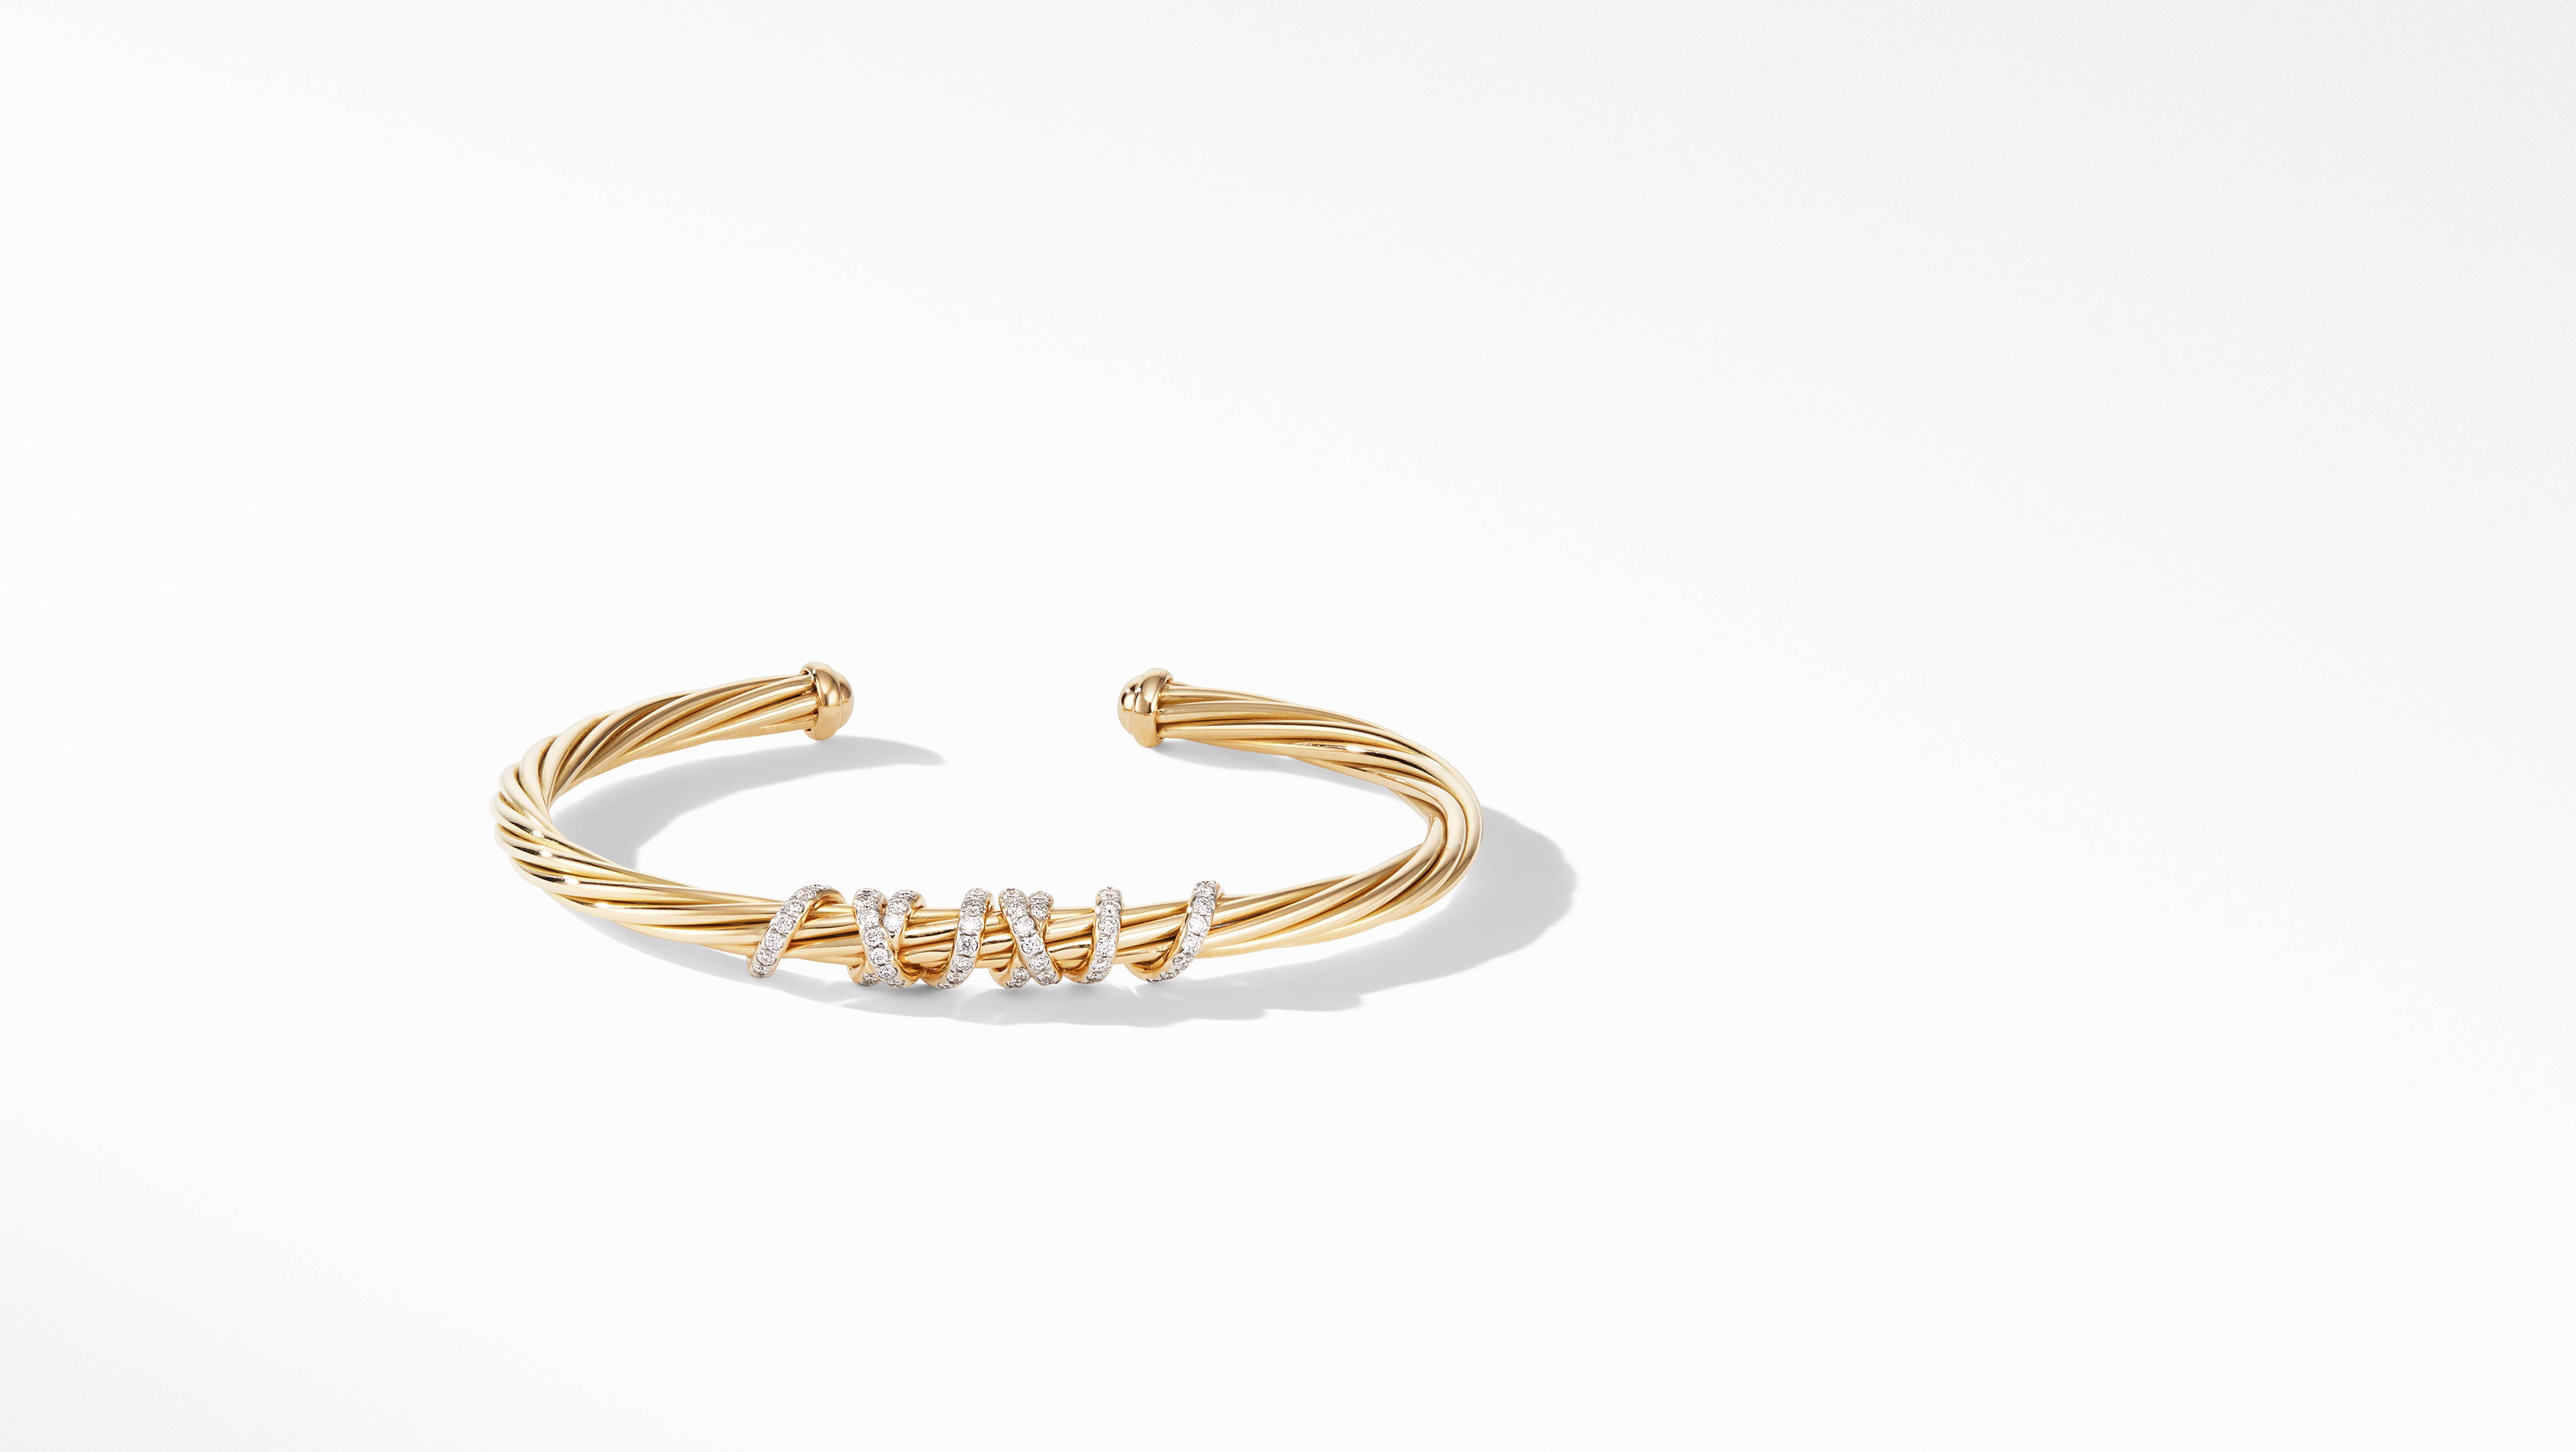 Details more than 67 david yurman diamond bracelet latest